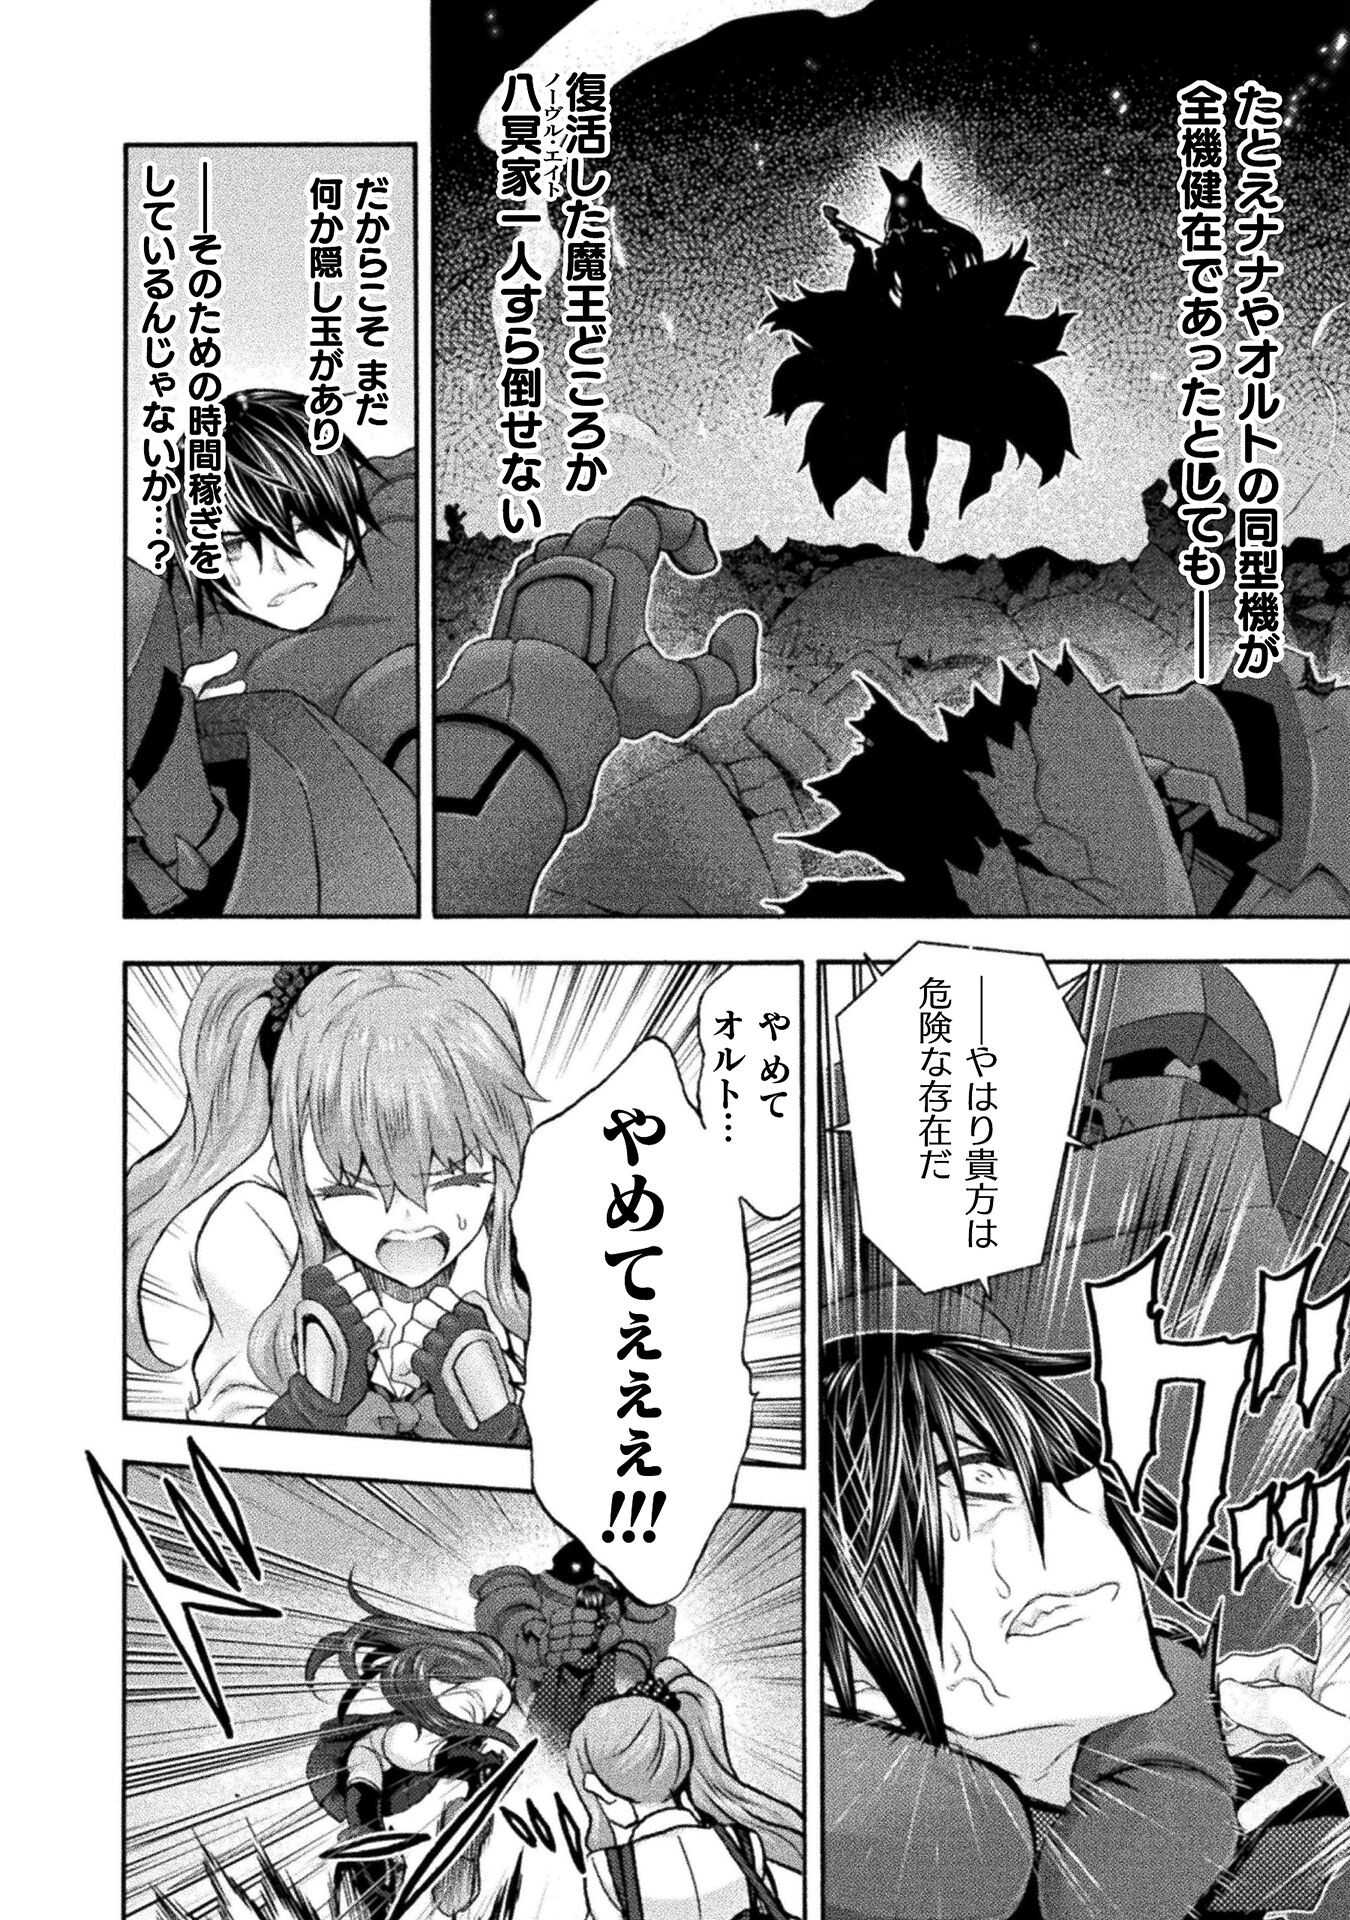 Himekishi ga Classmate! - Chapter 59 - Page 2